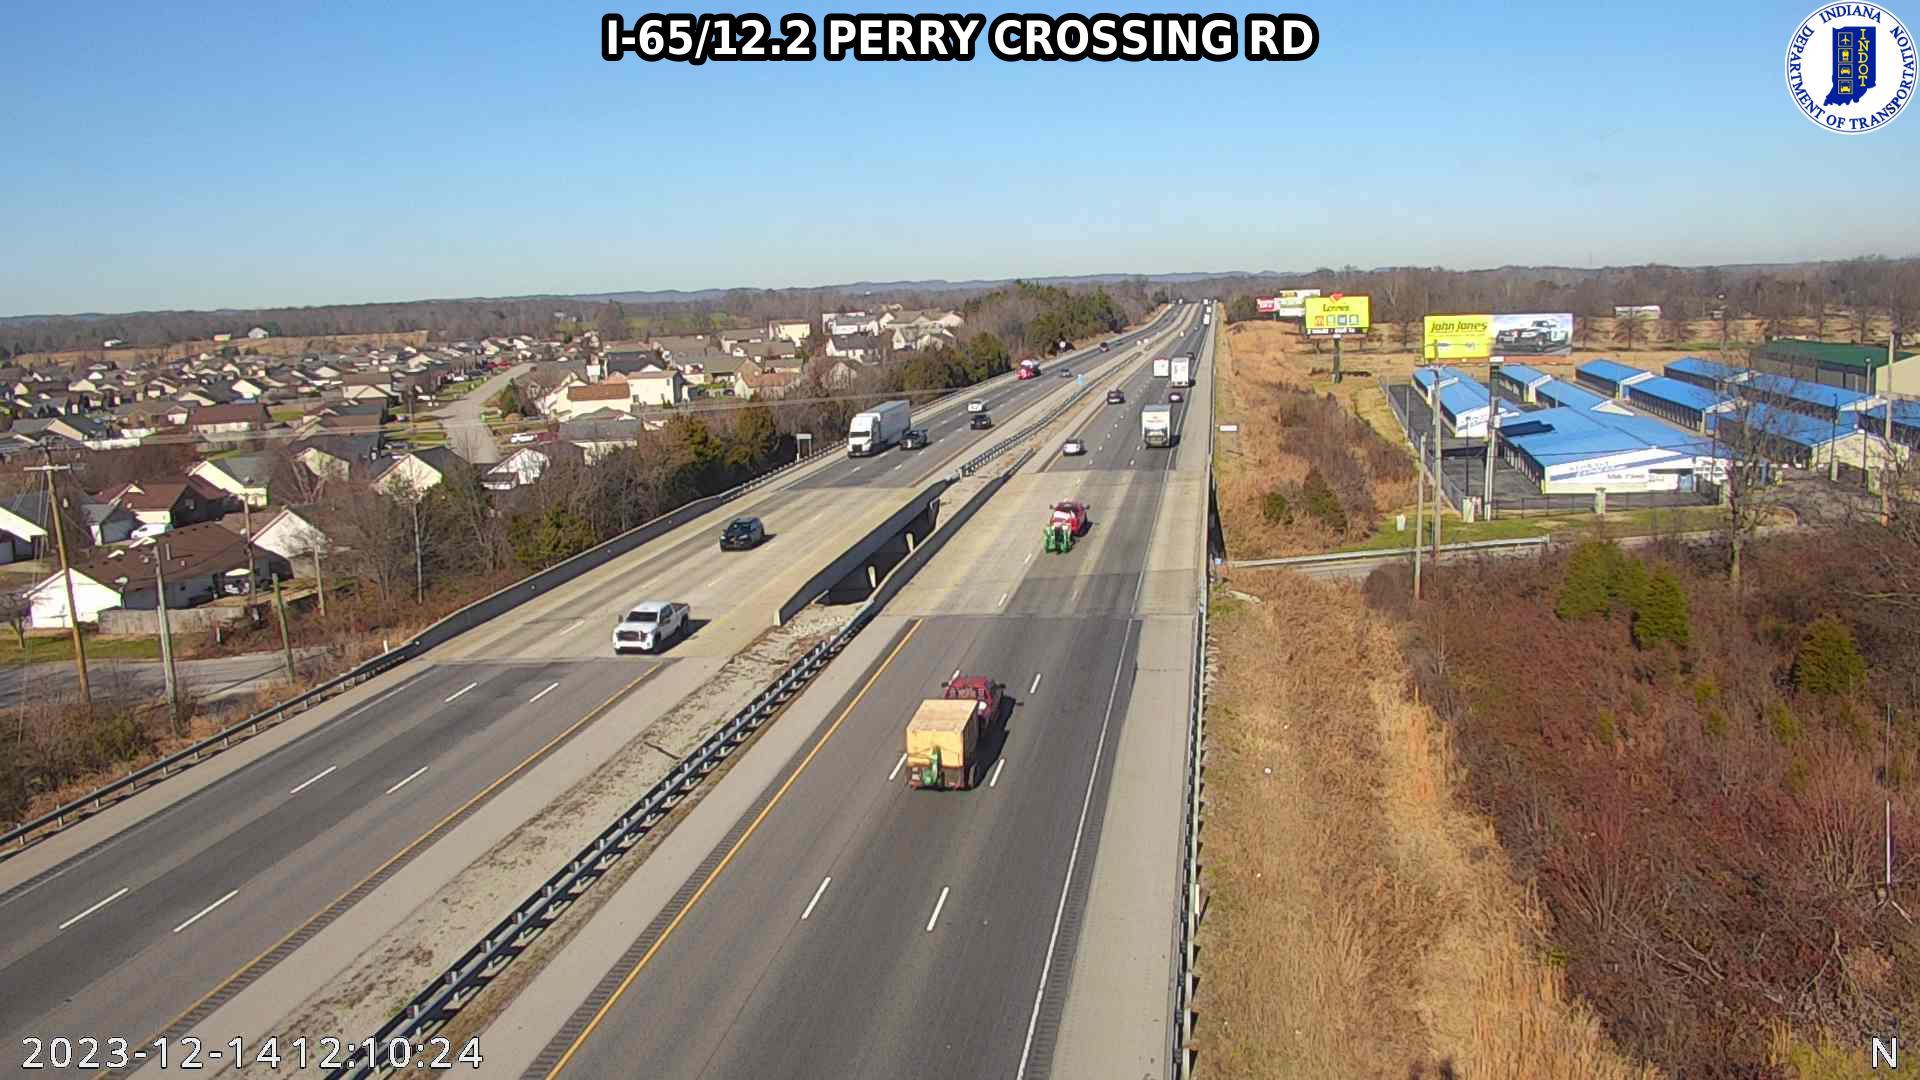 Perry Crossing: I-65: I-65/12.2 - RD Traffic Camera